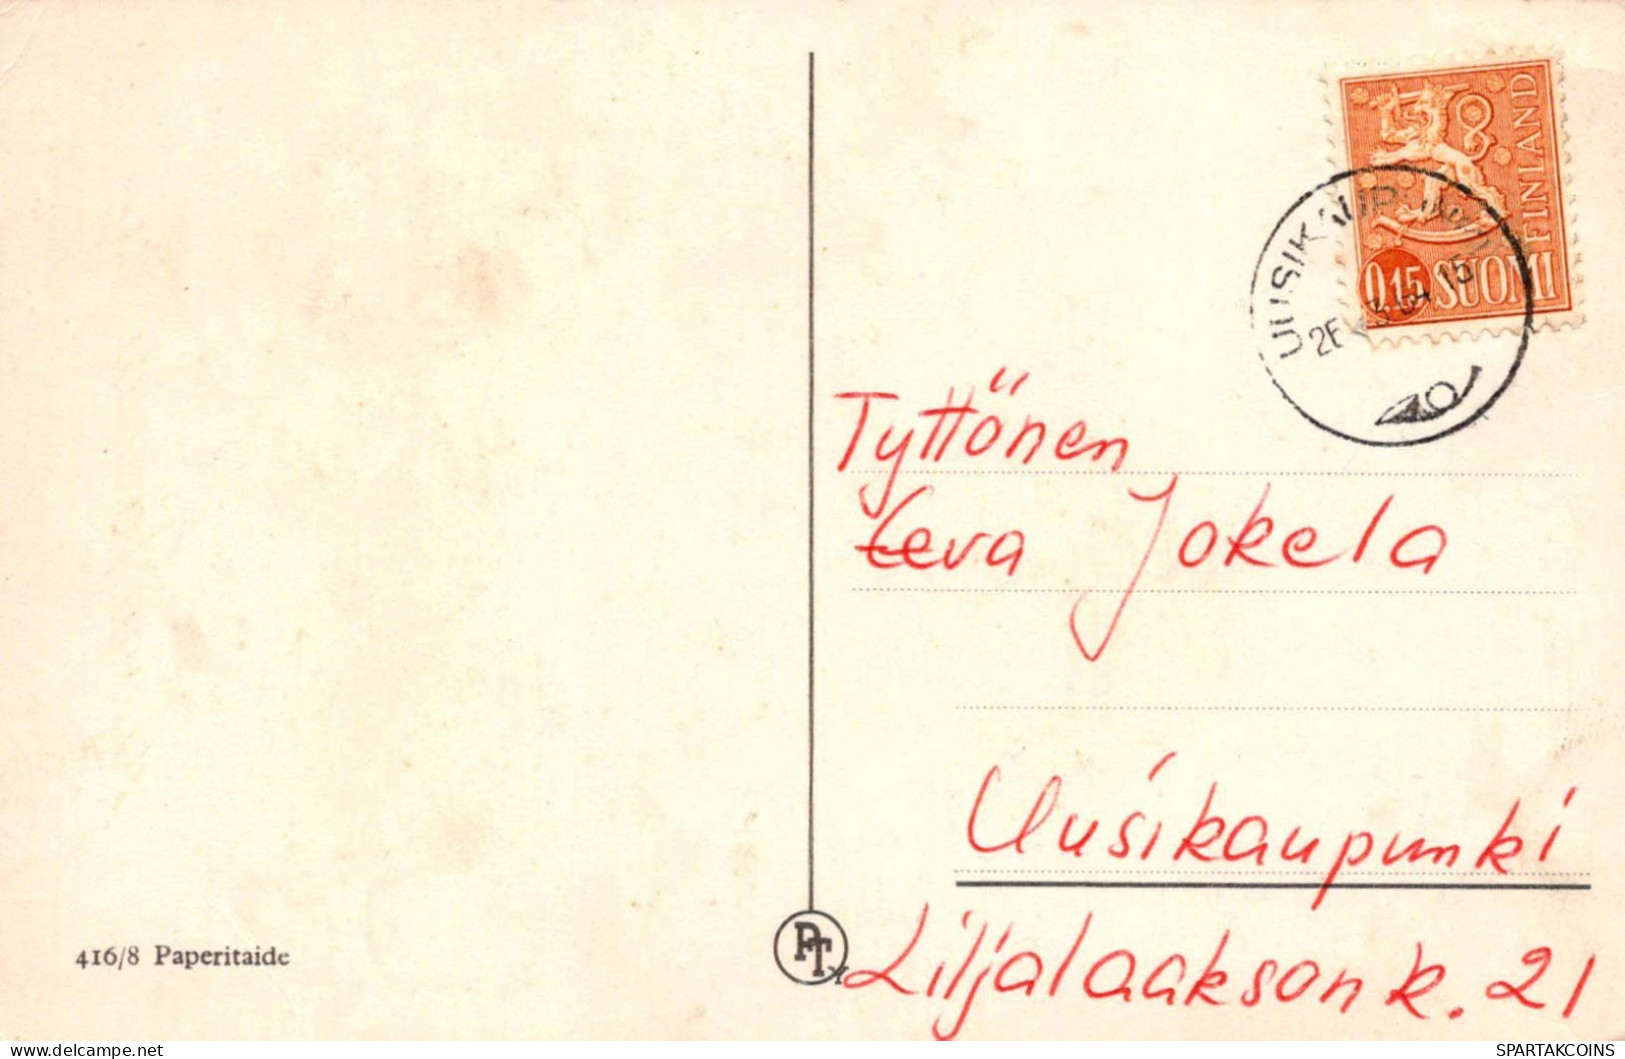 OSTERN HUHN EI Vintage Ansichtskarte Postkarte CPA #PKE102.DE - Ostern